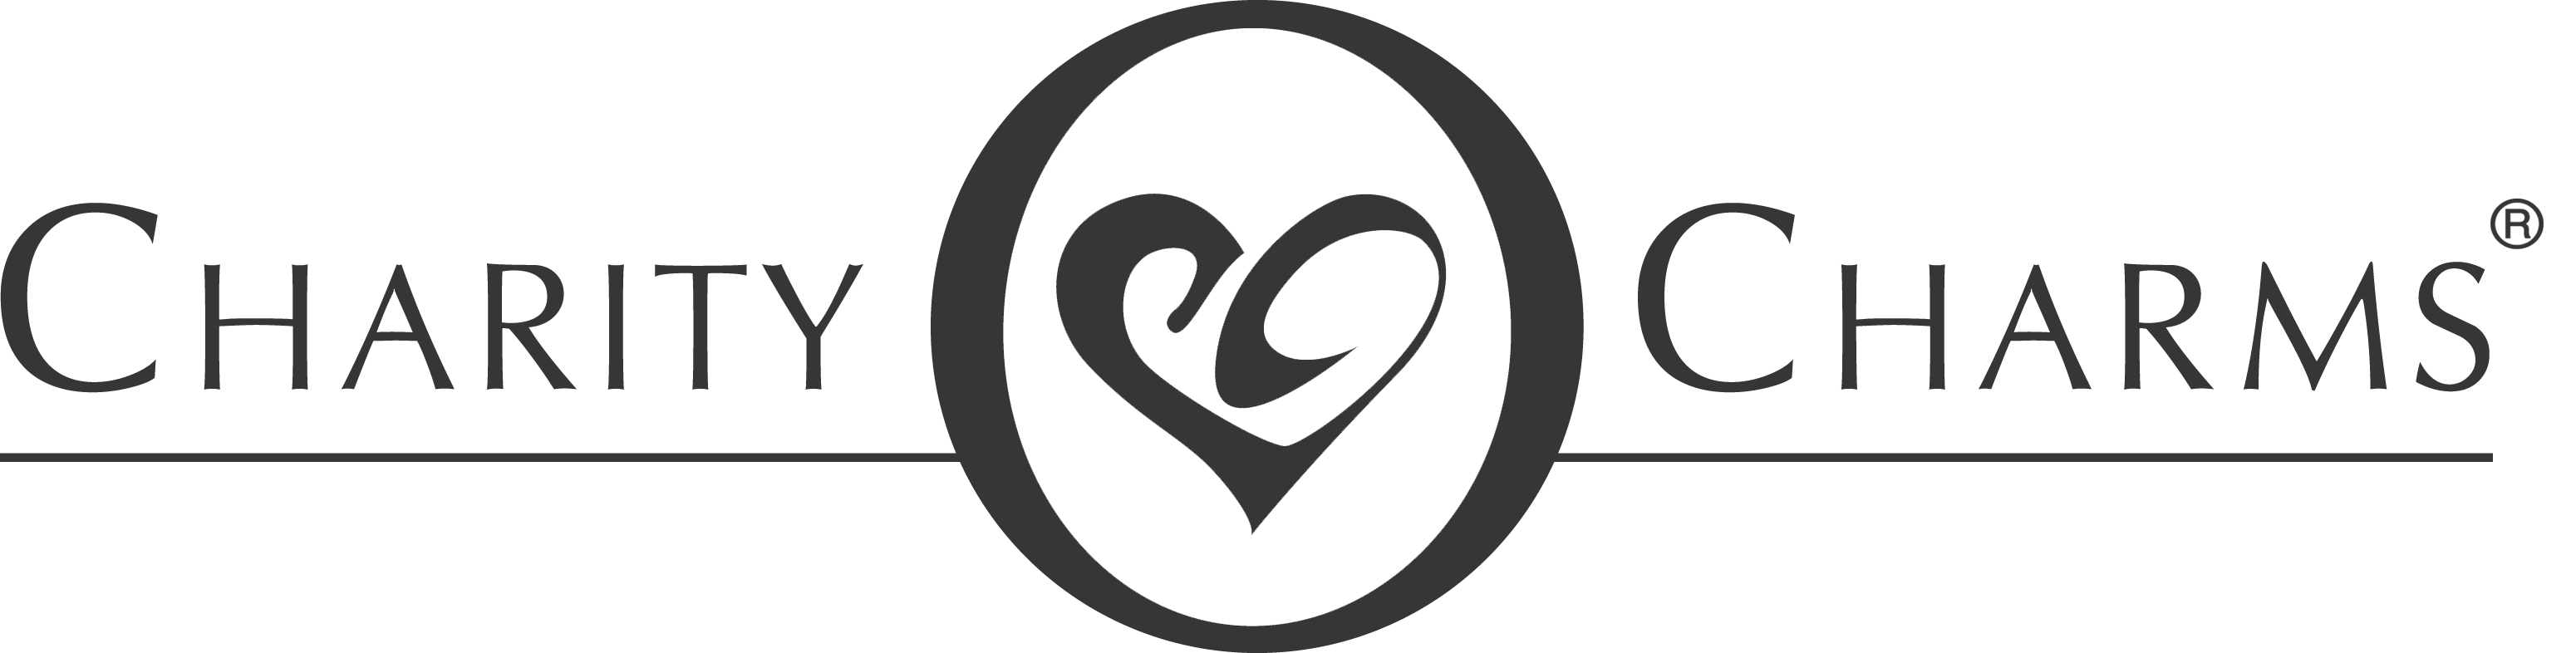 charity charms logo